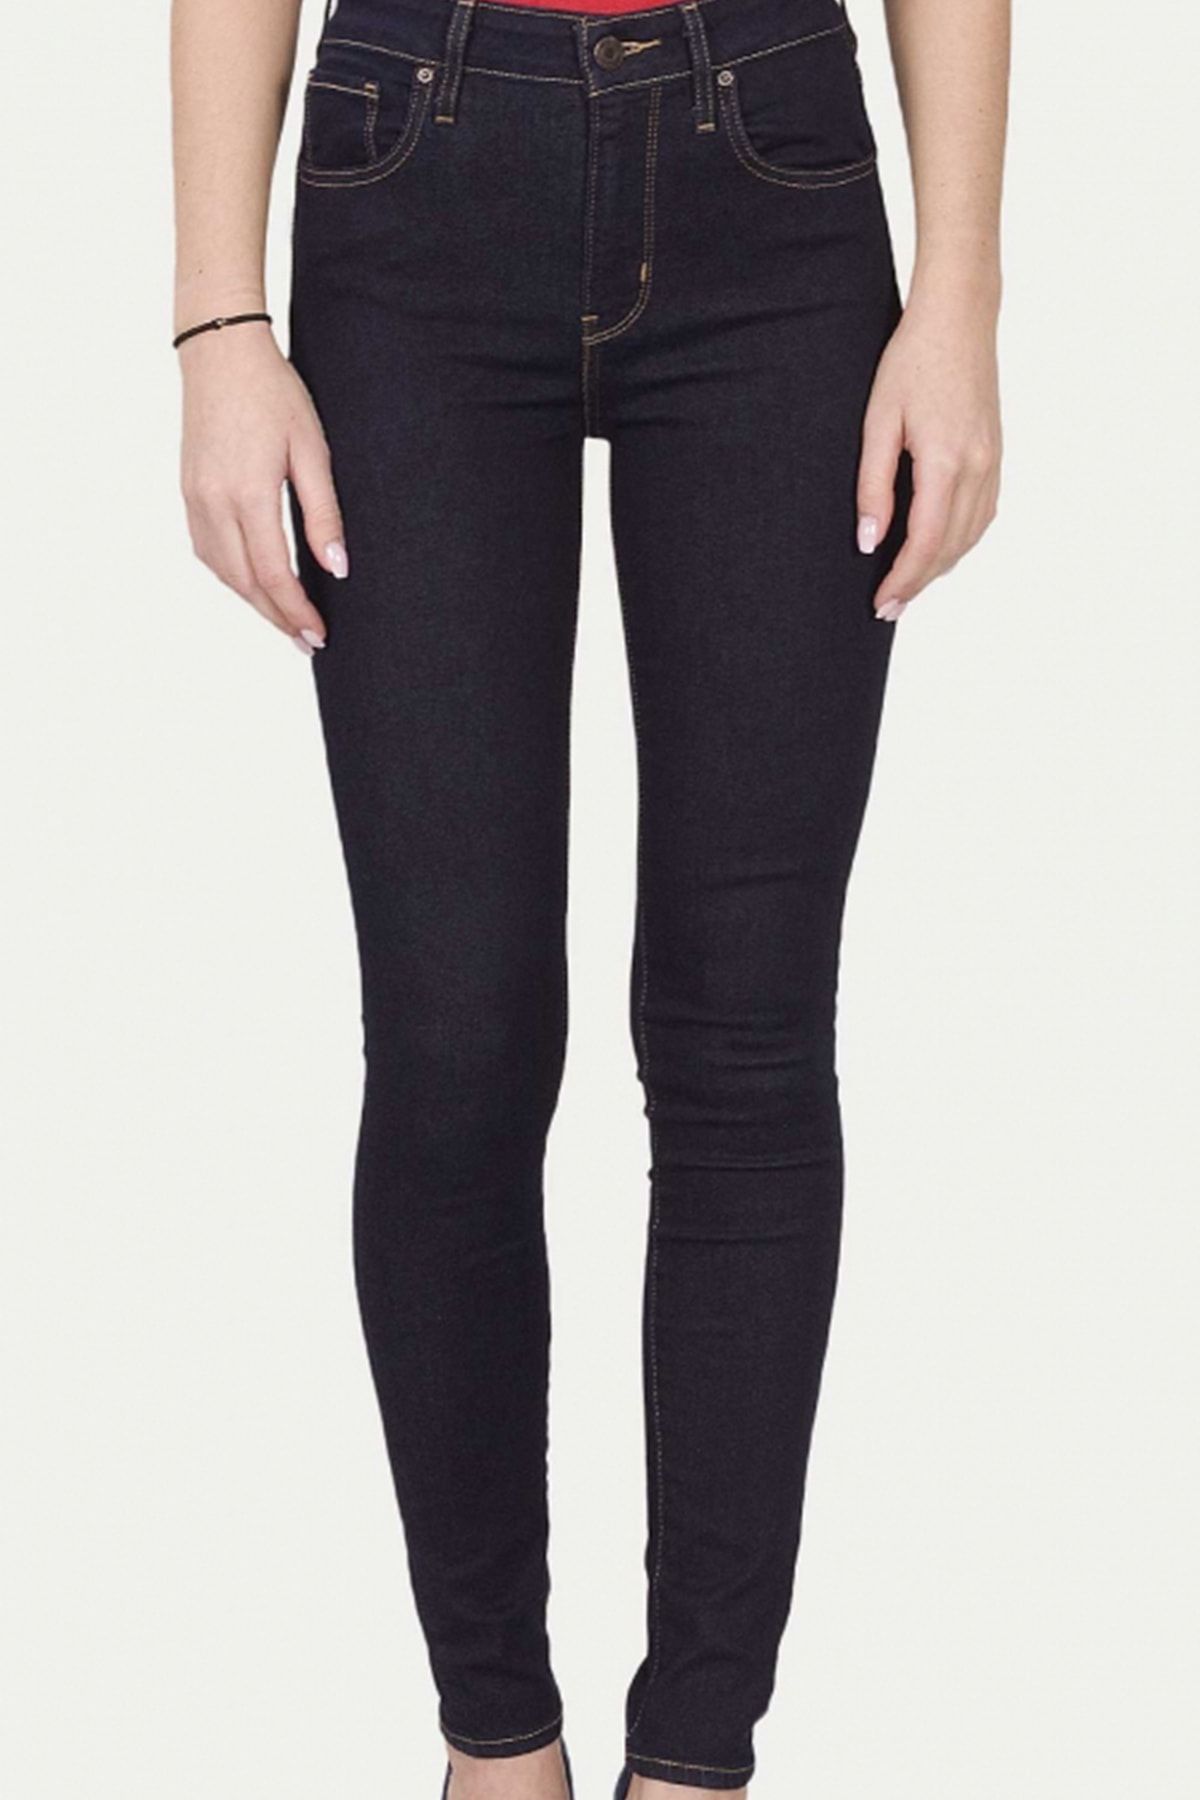 Levi's 721 Jeans Kadın Kot Pantolon 18882-0188 Lacivert